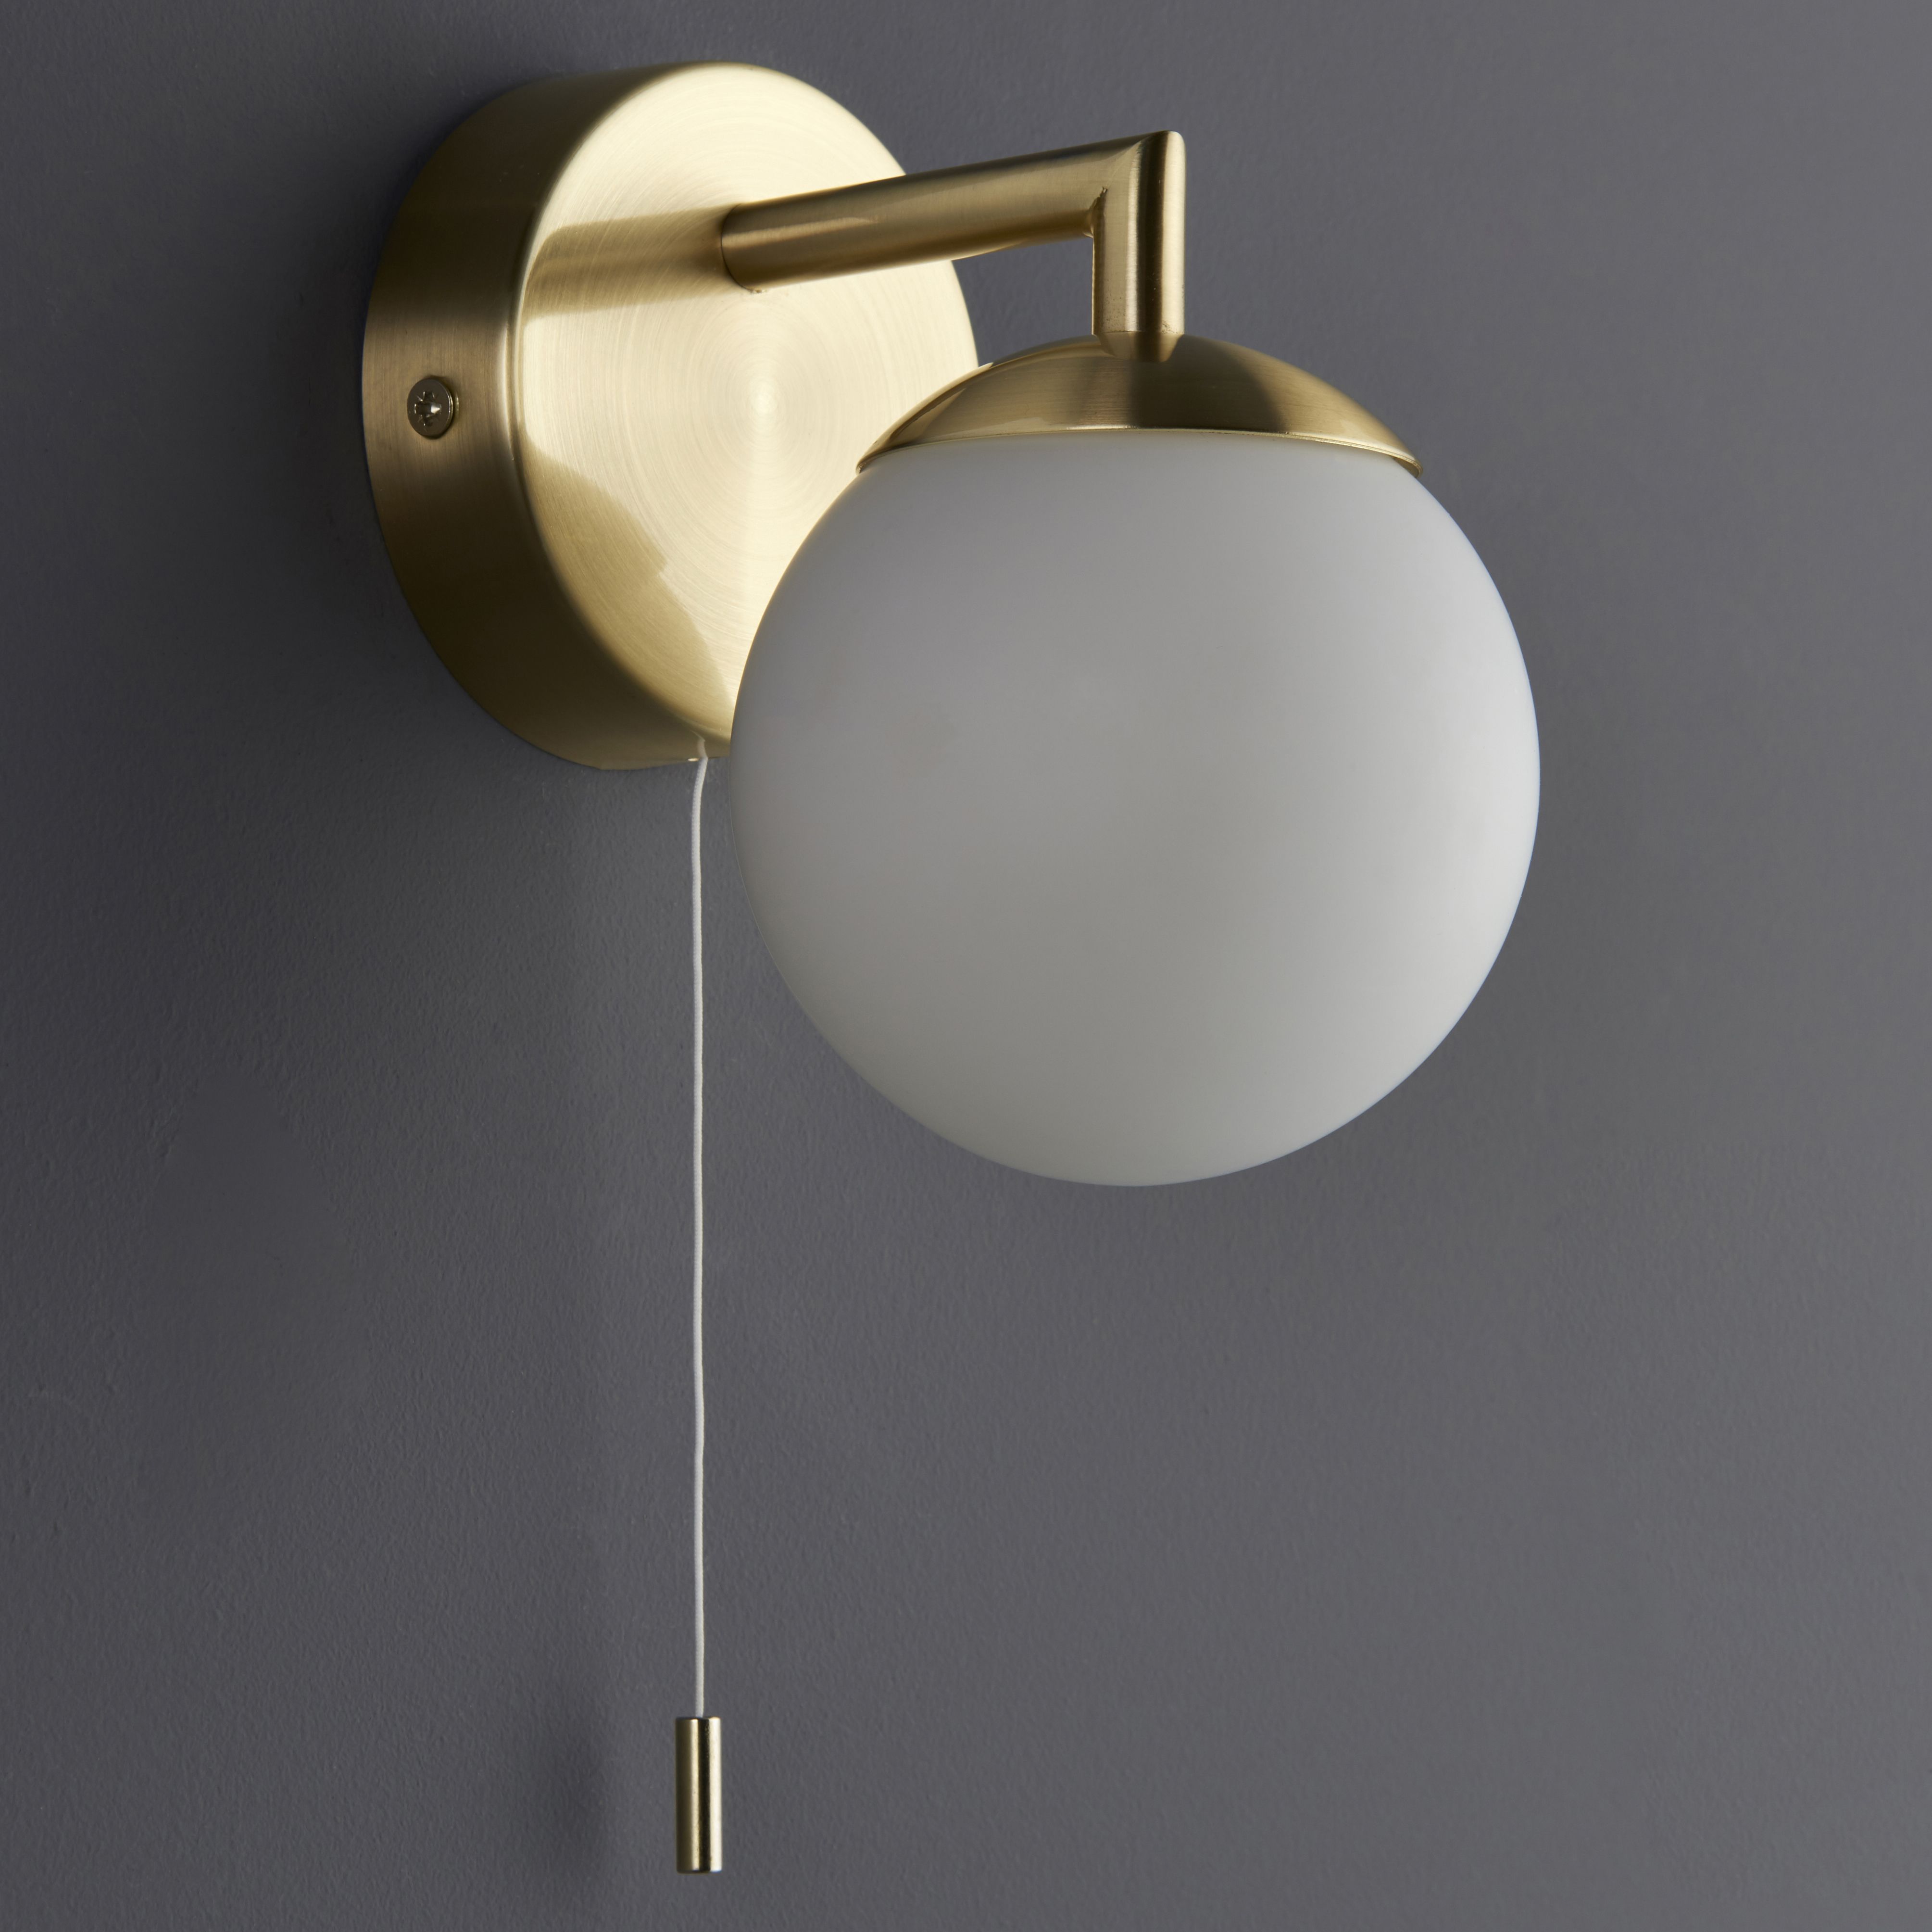 Cap Contemporary Gold effect Bathroom LED Wall light